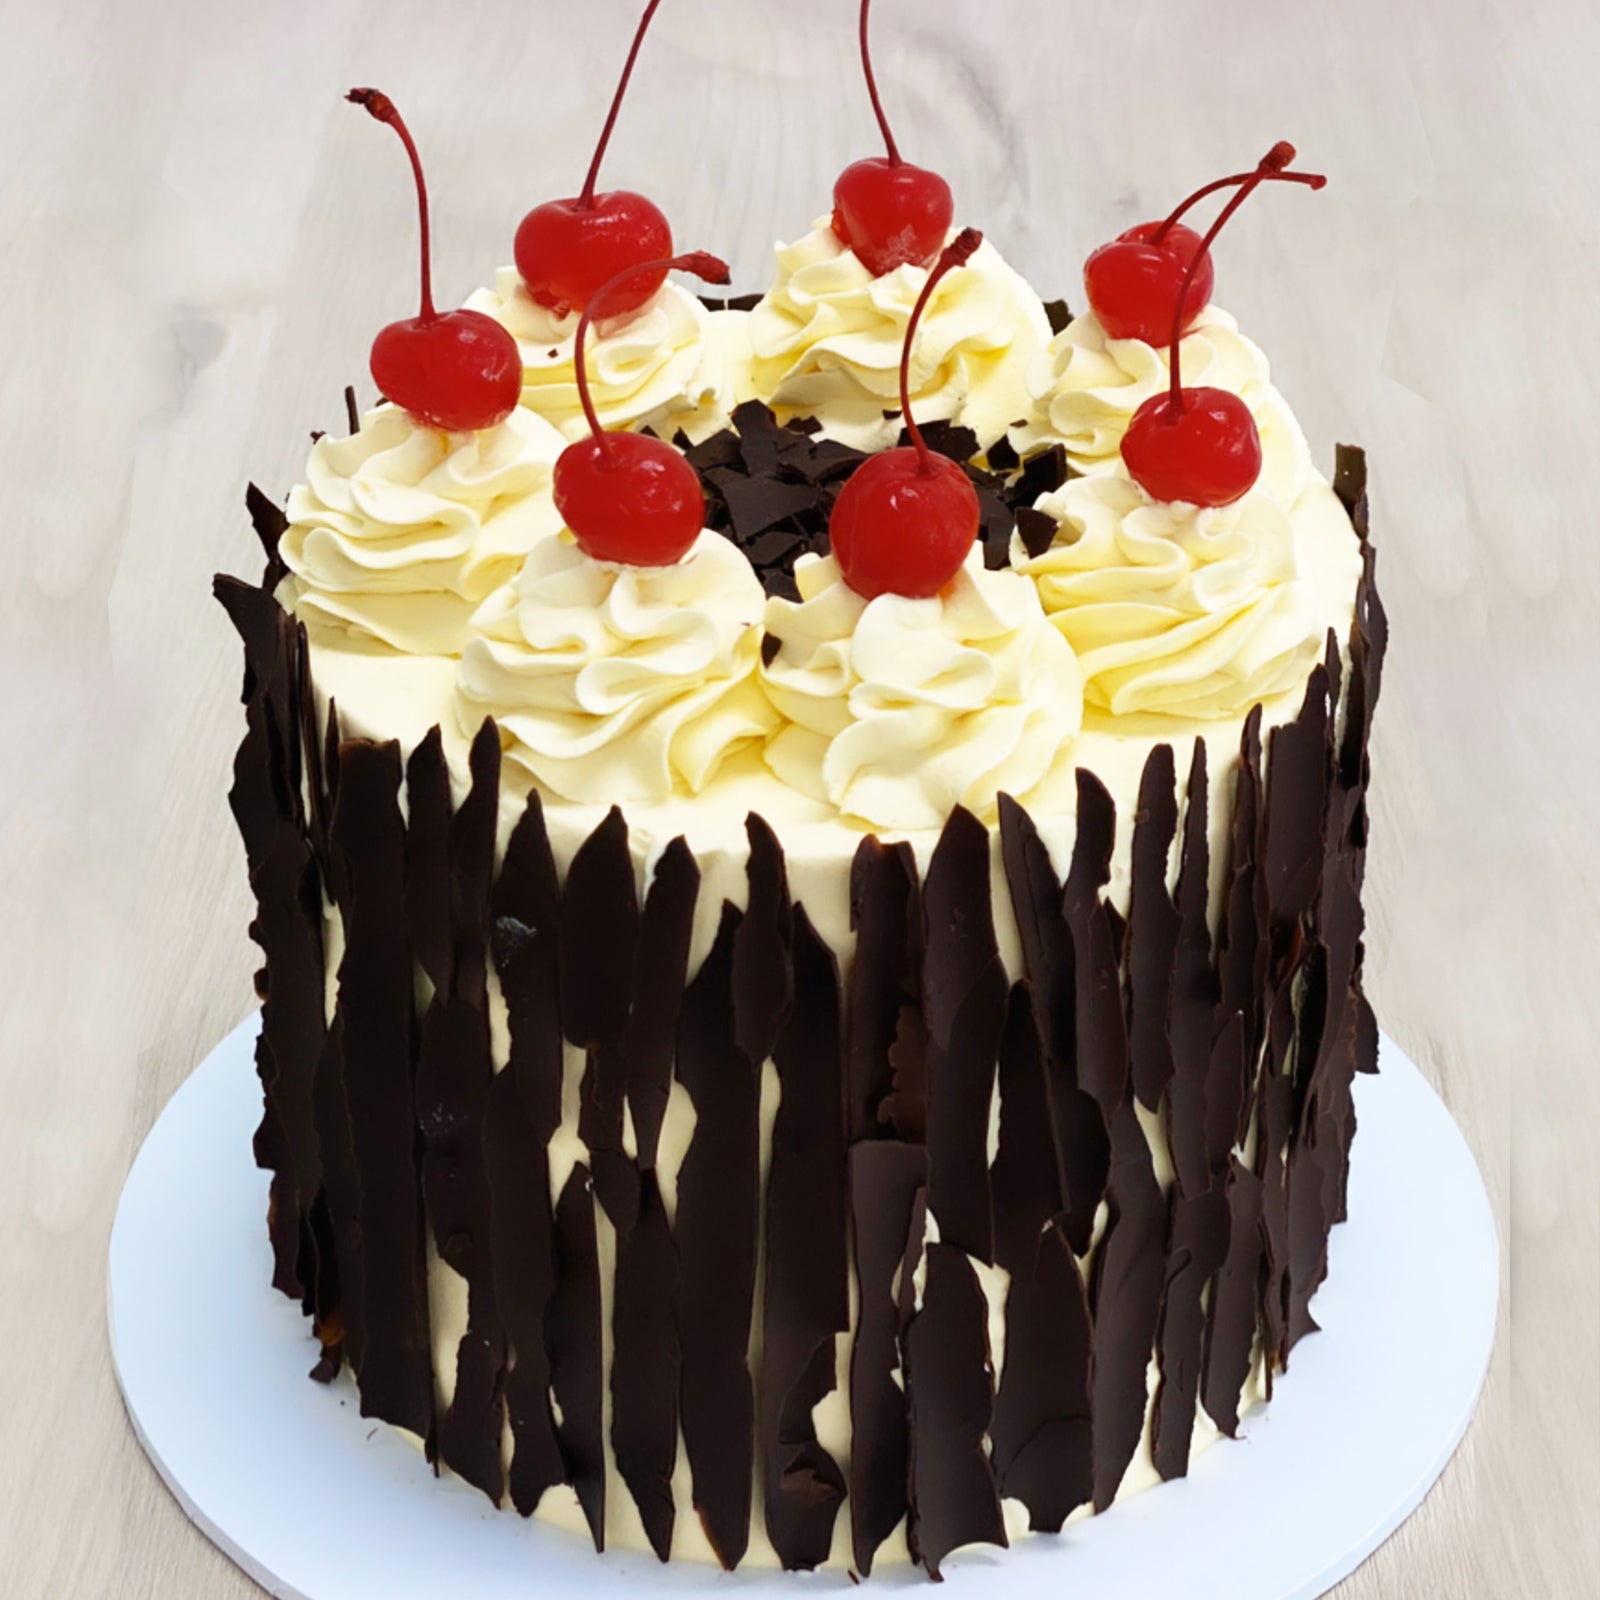 Black forest cake with chocolate ganache